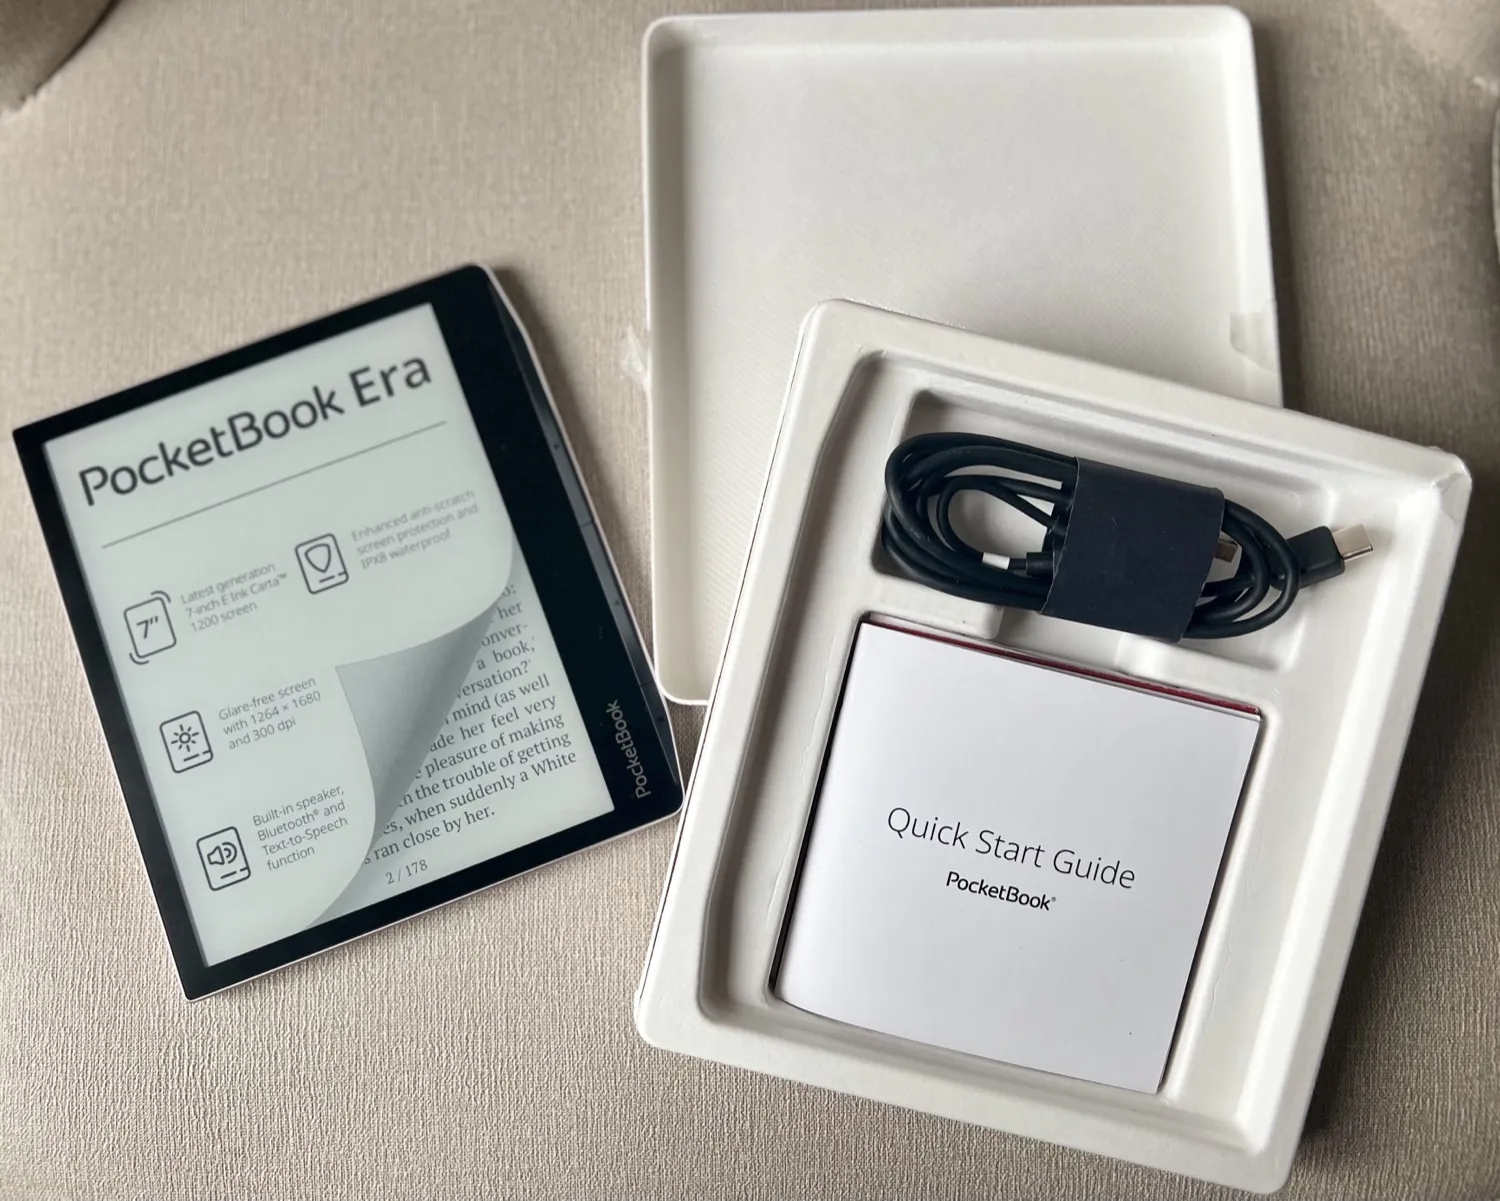 Unboxing the brand new Pocketbook Era e-reader - Good e-Reader